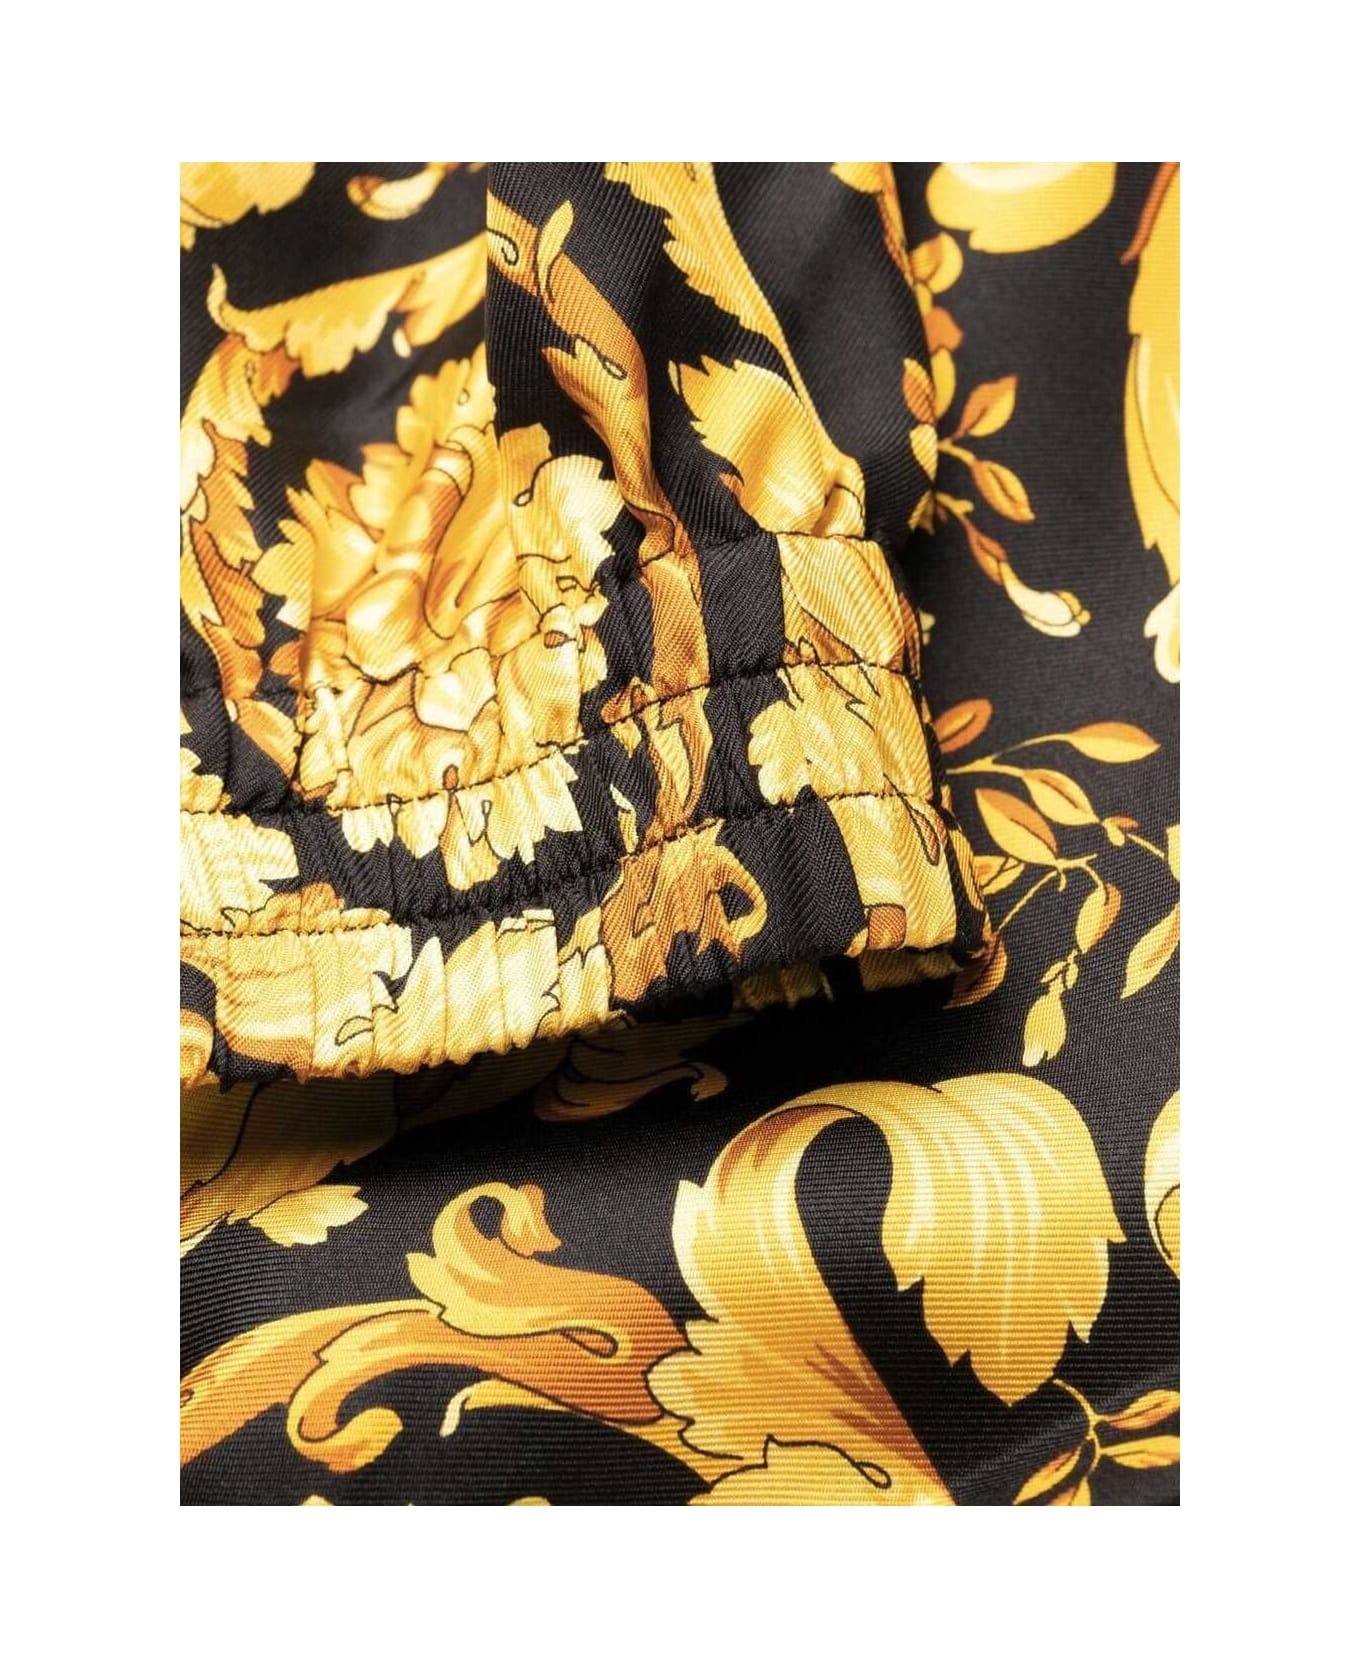 Versace Shorts - Gold ショートパンツ